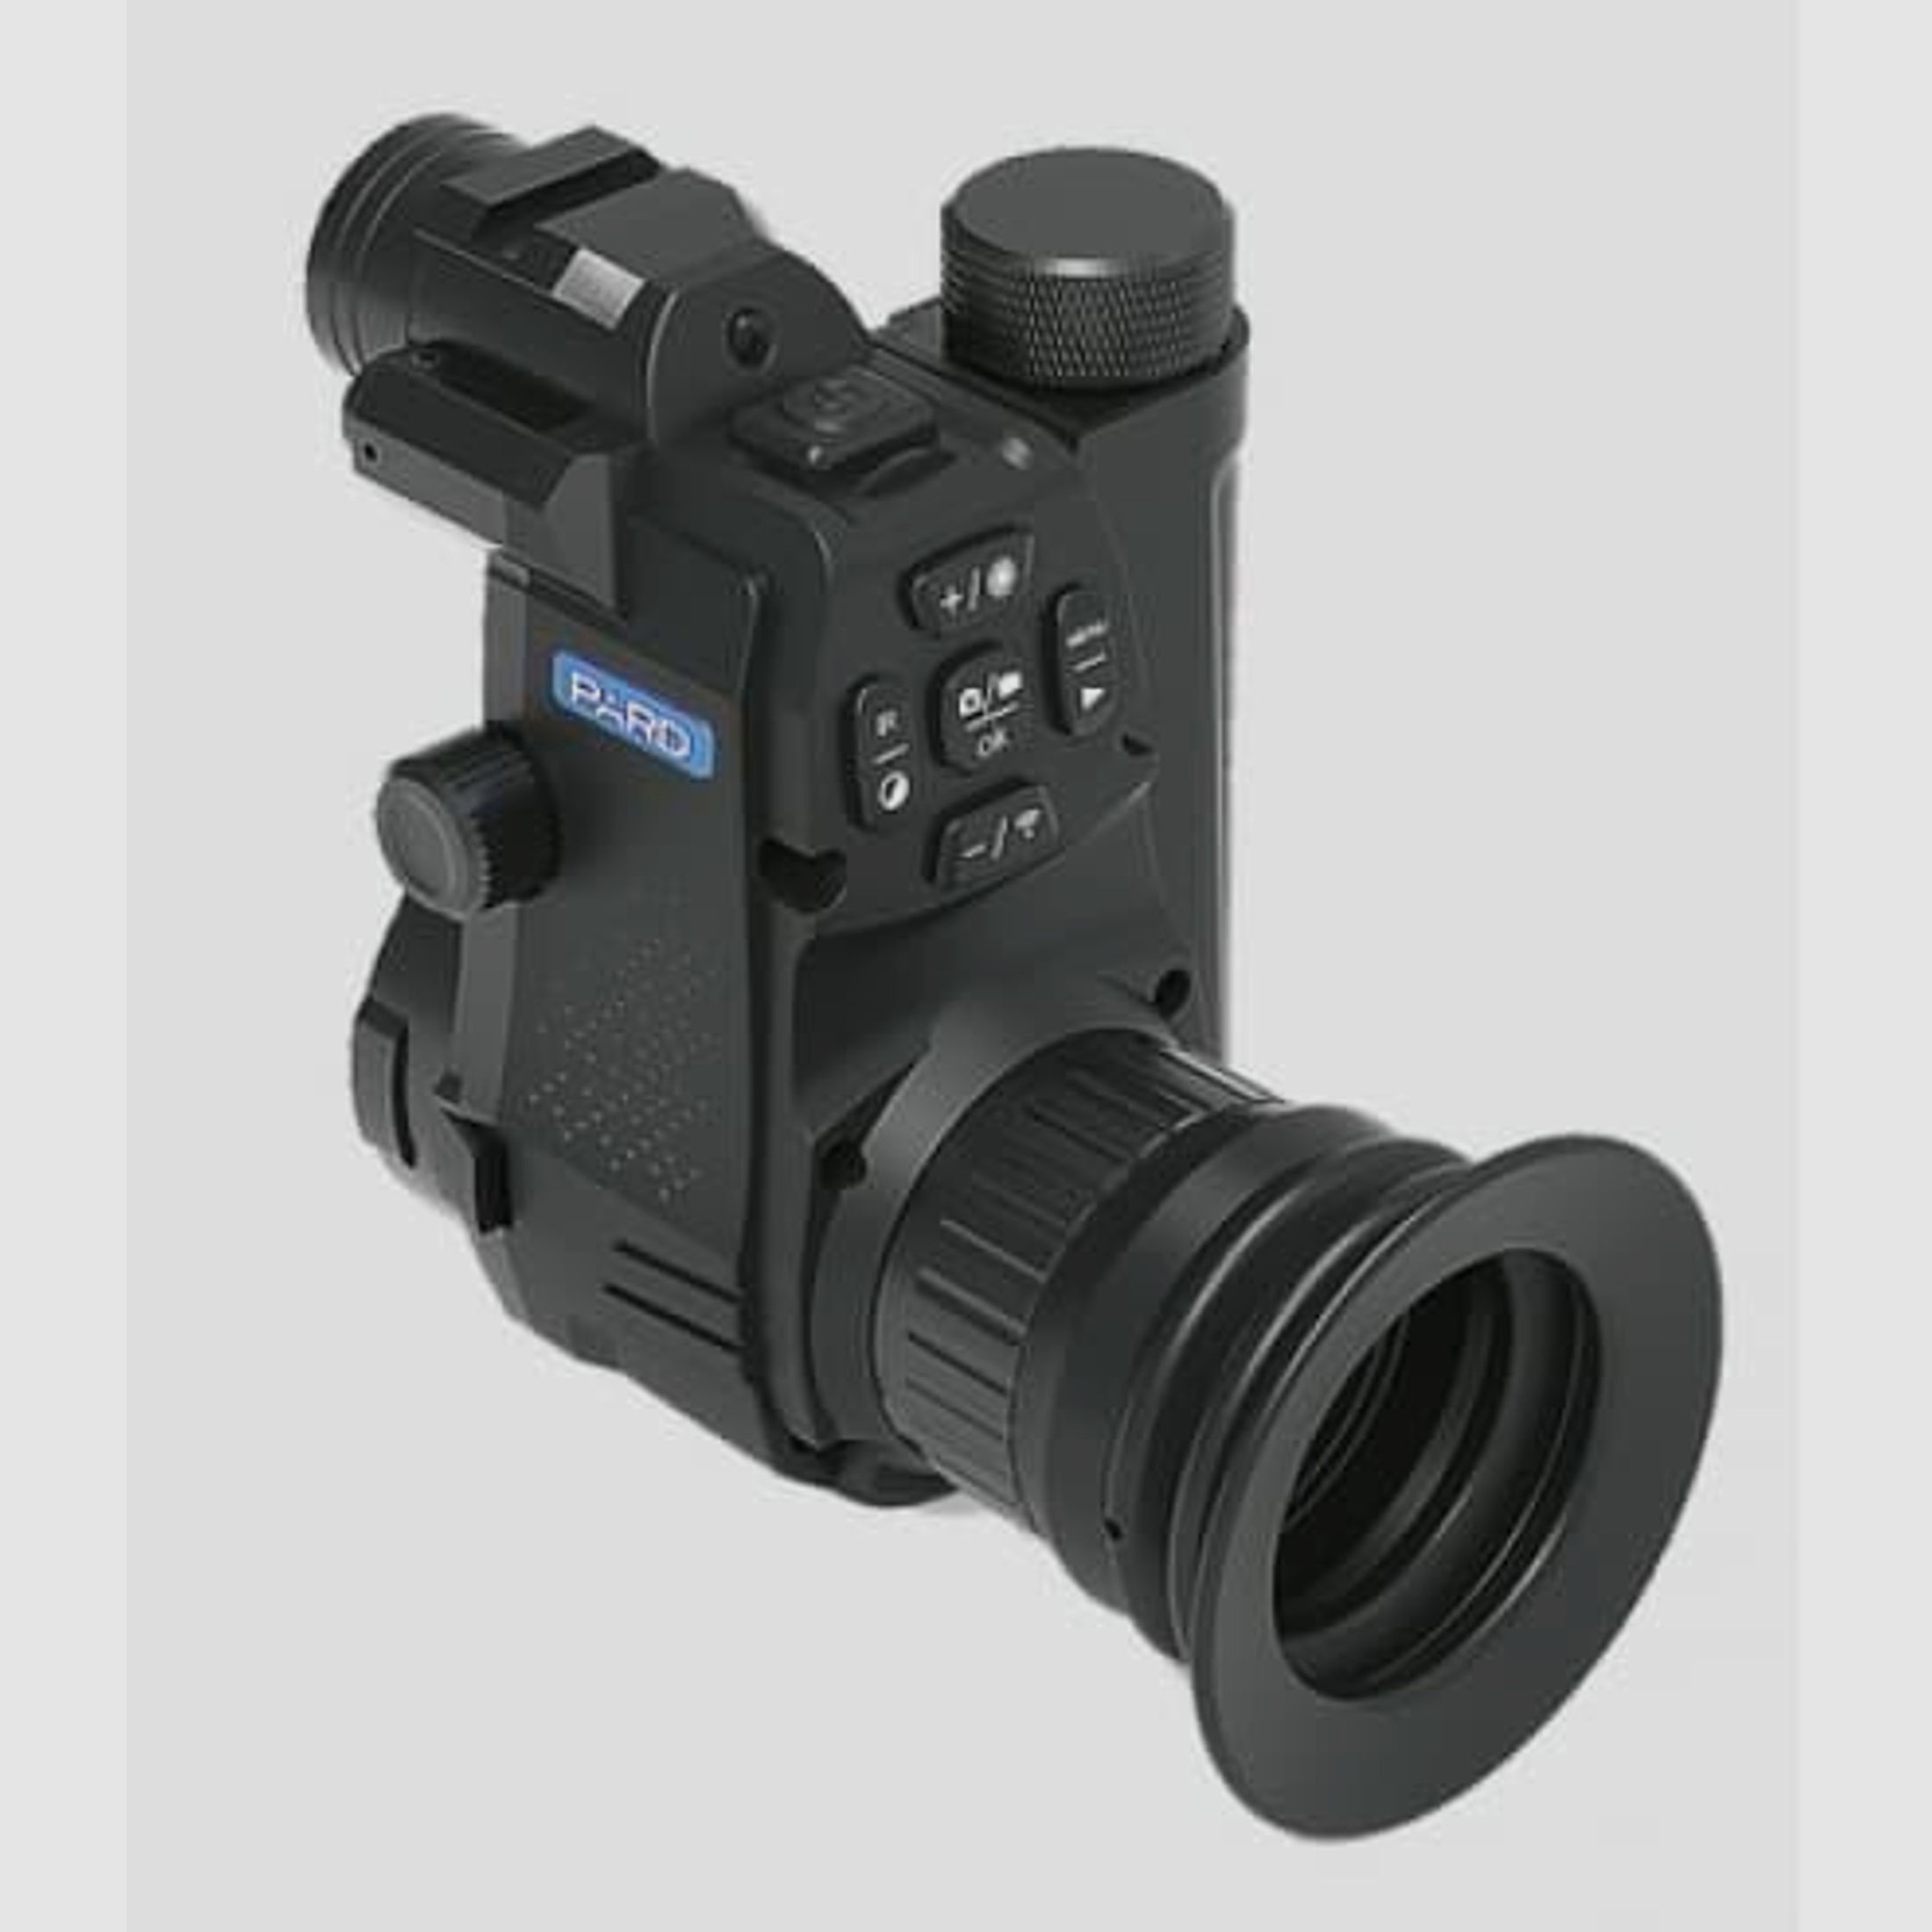 PARD NachtSicht Nachtsichtgerät NV007S digital 940nm Dual-Use-Nachsatzgerät